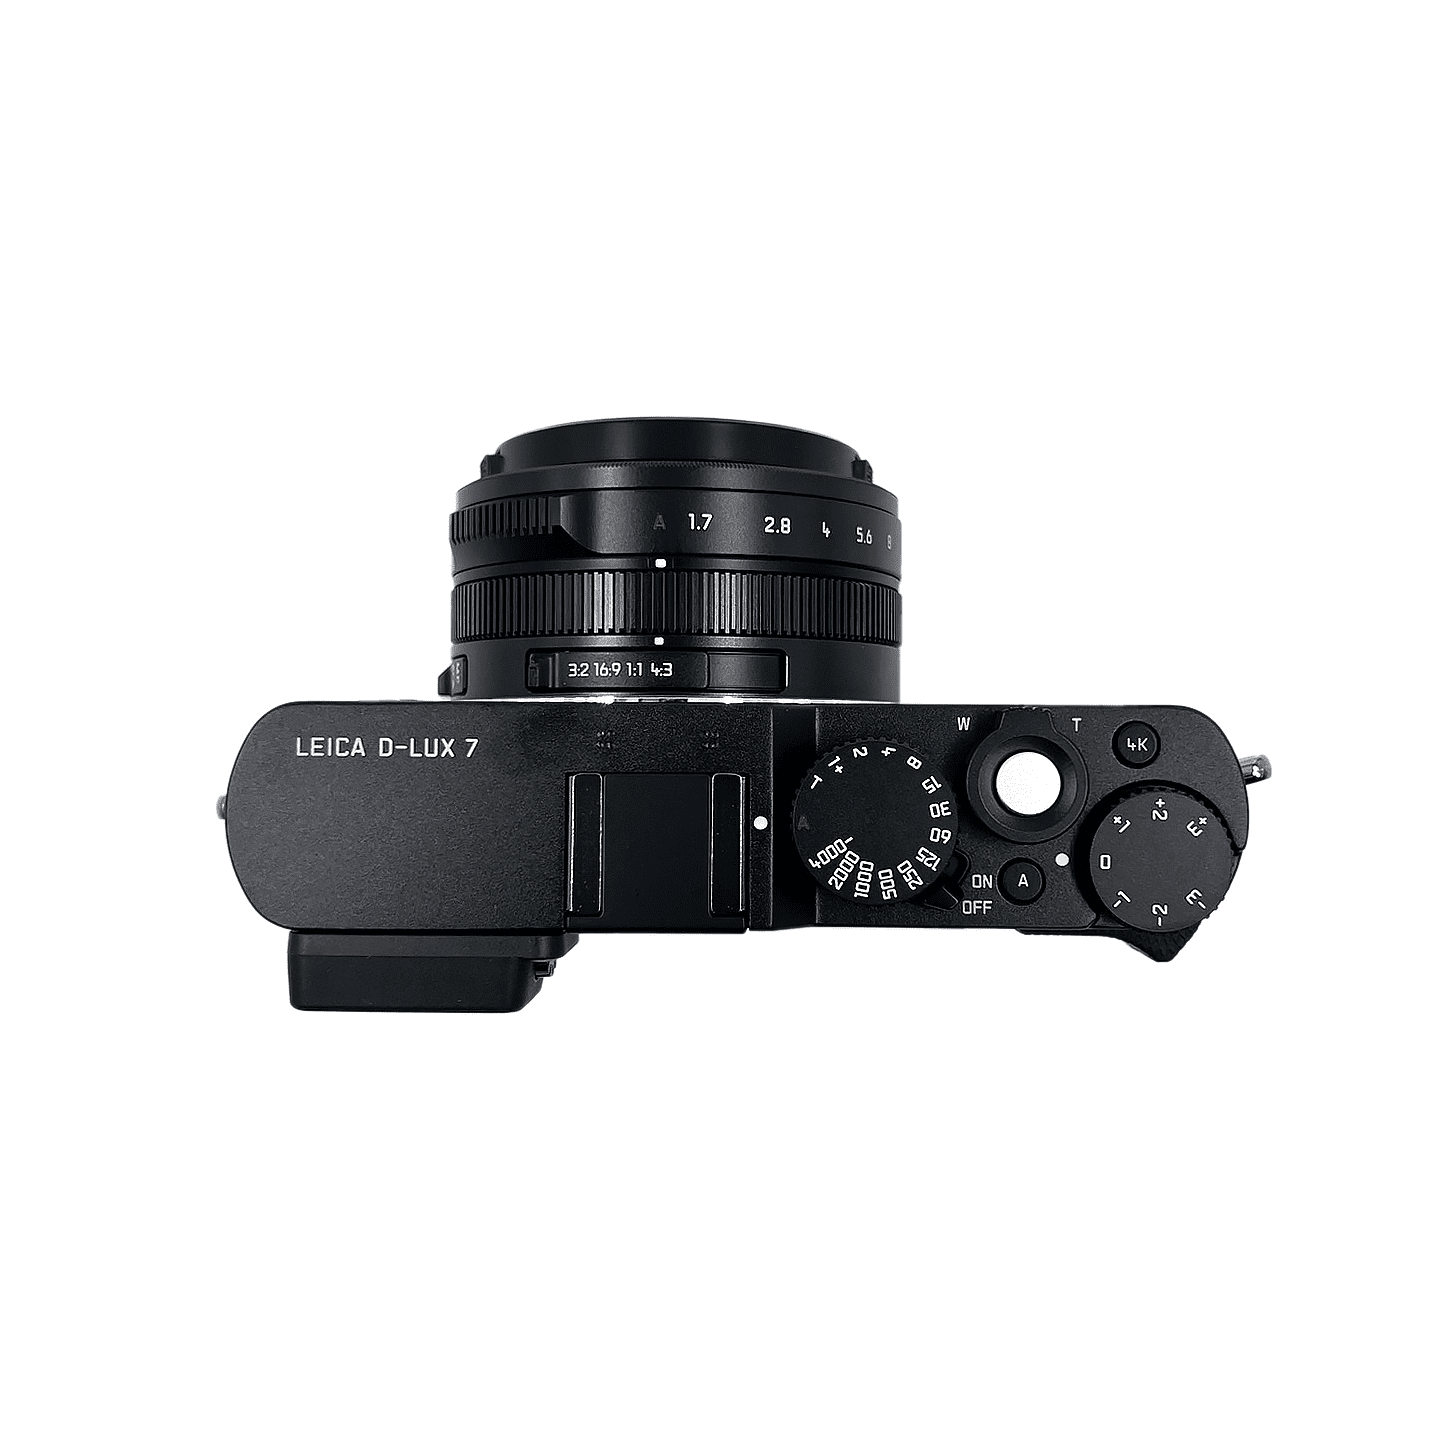 Leica D - Lux 7 Digital Camera (Black) (19141) + 64GB Extreme Pro Card +  Card Reader + Case + Cleaning Set + Memory Wallet - Starter Bundle